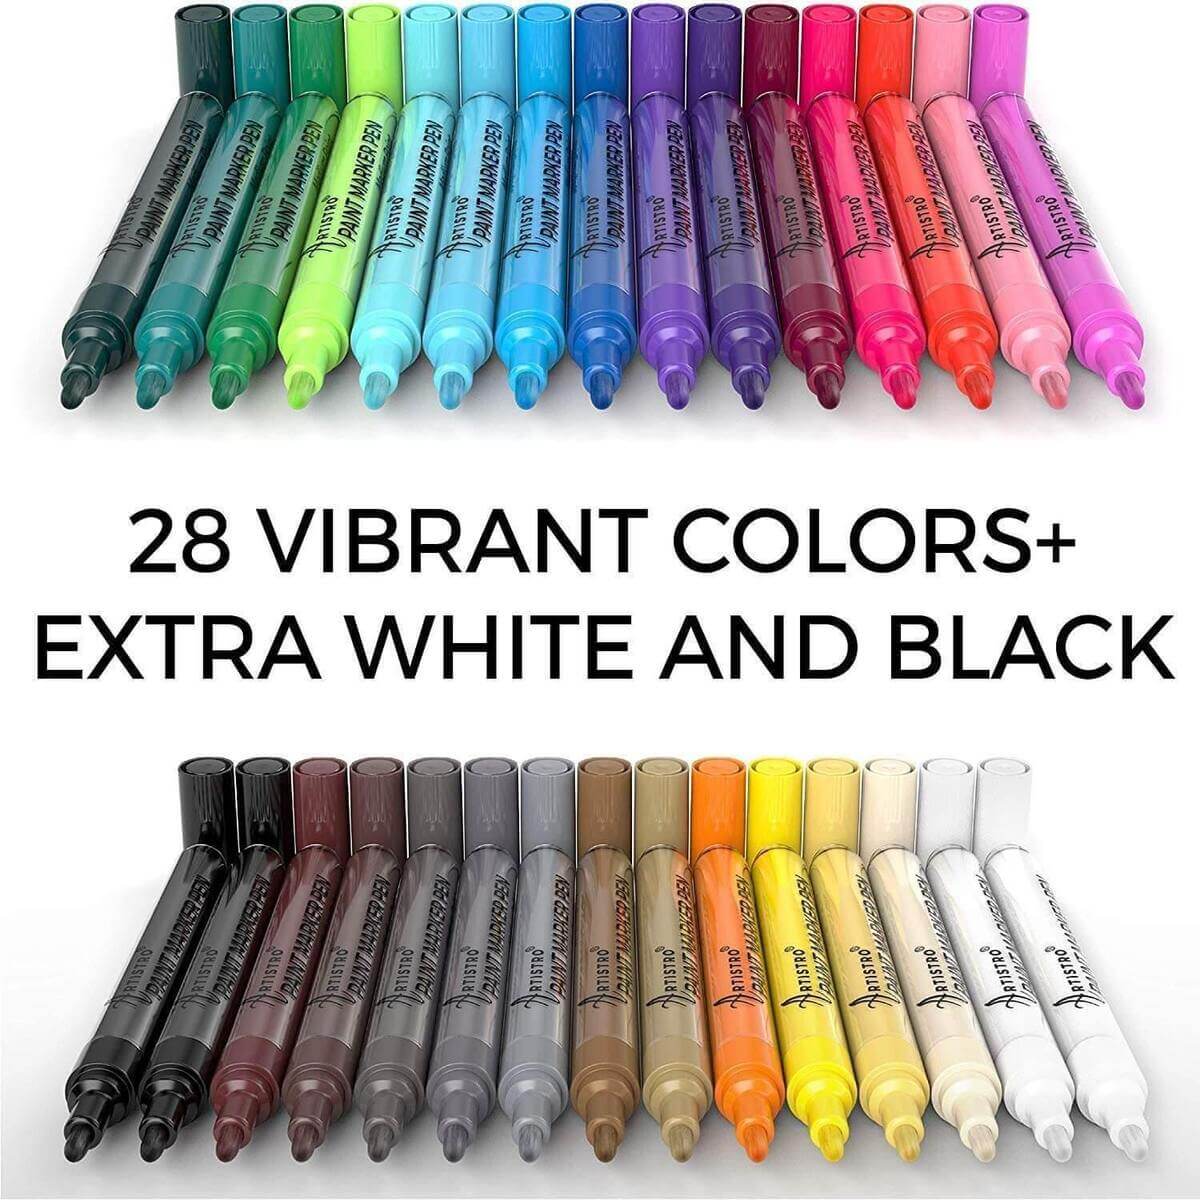 60 Acrylic + 15 Oil Based paint pen pack